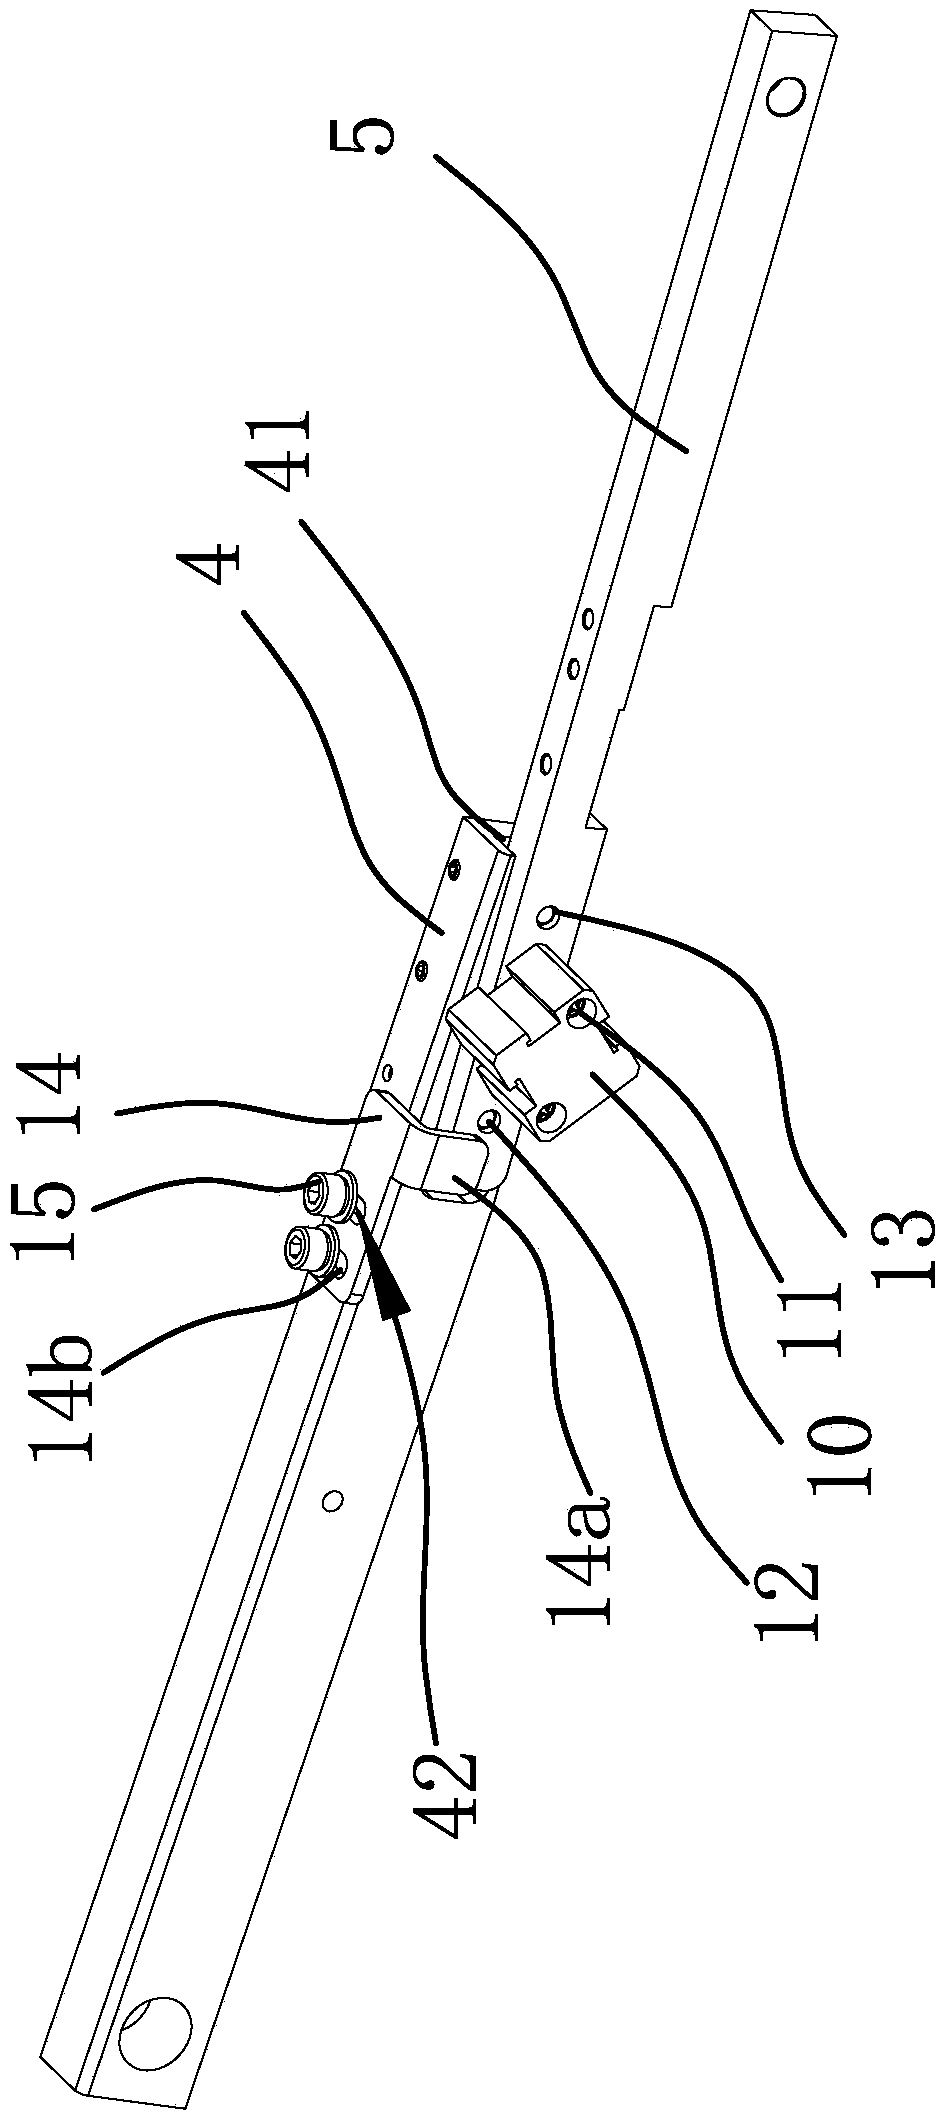 Big presser foot component structure of placket machine